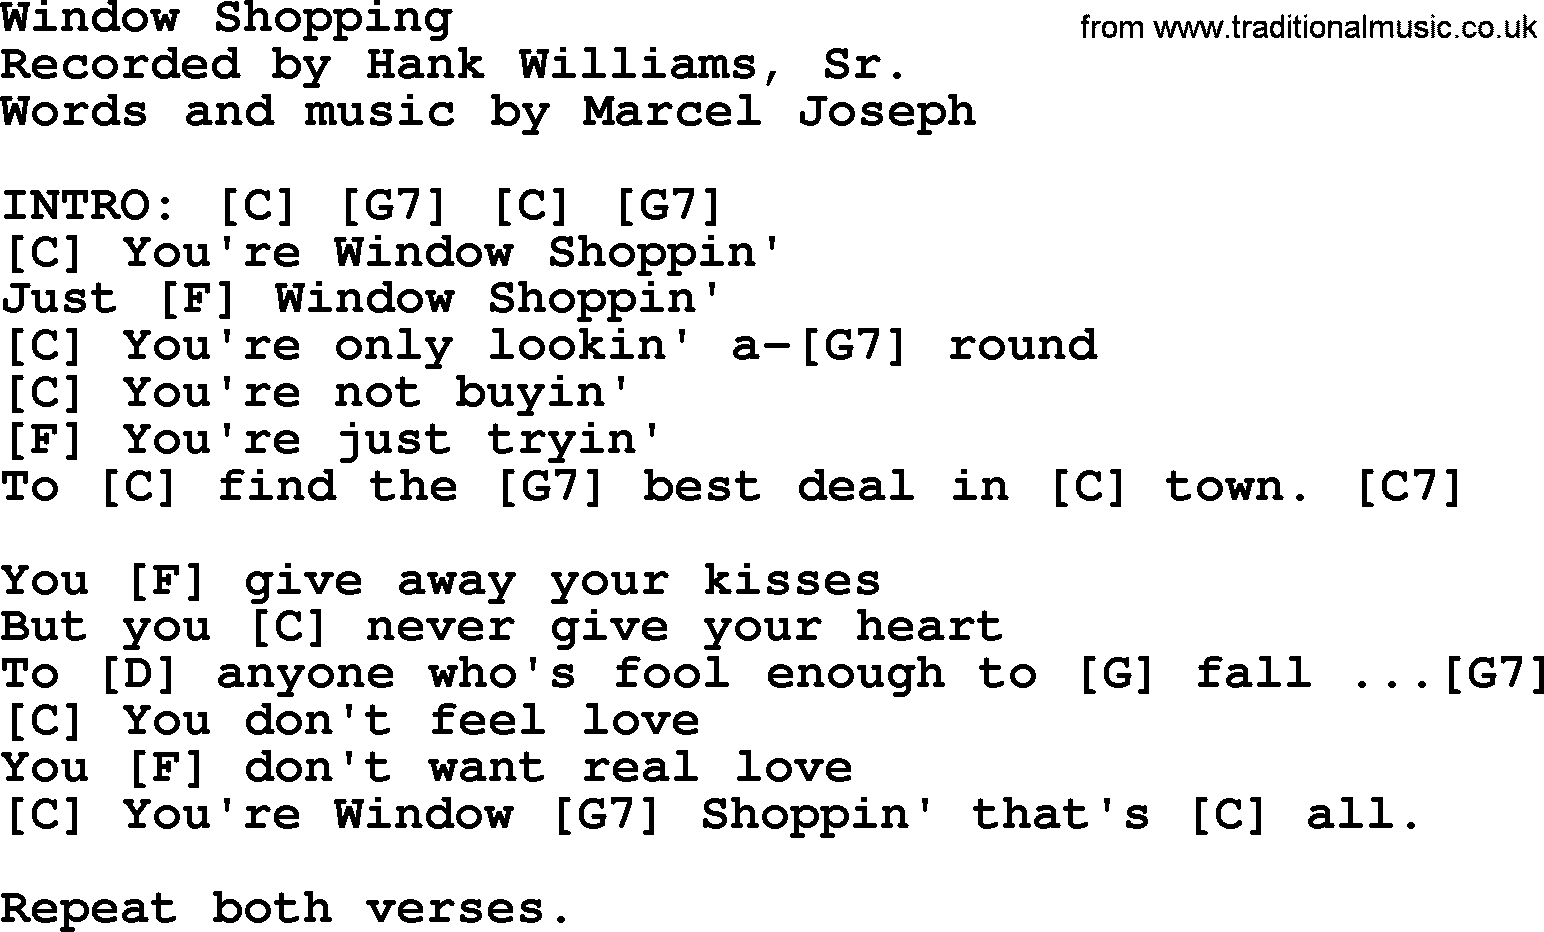 Hank Williams song Window Shopping, lyrics and chords